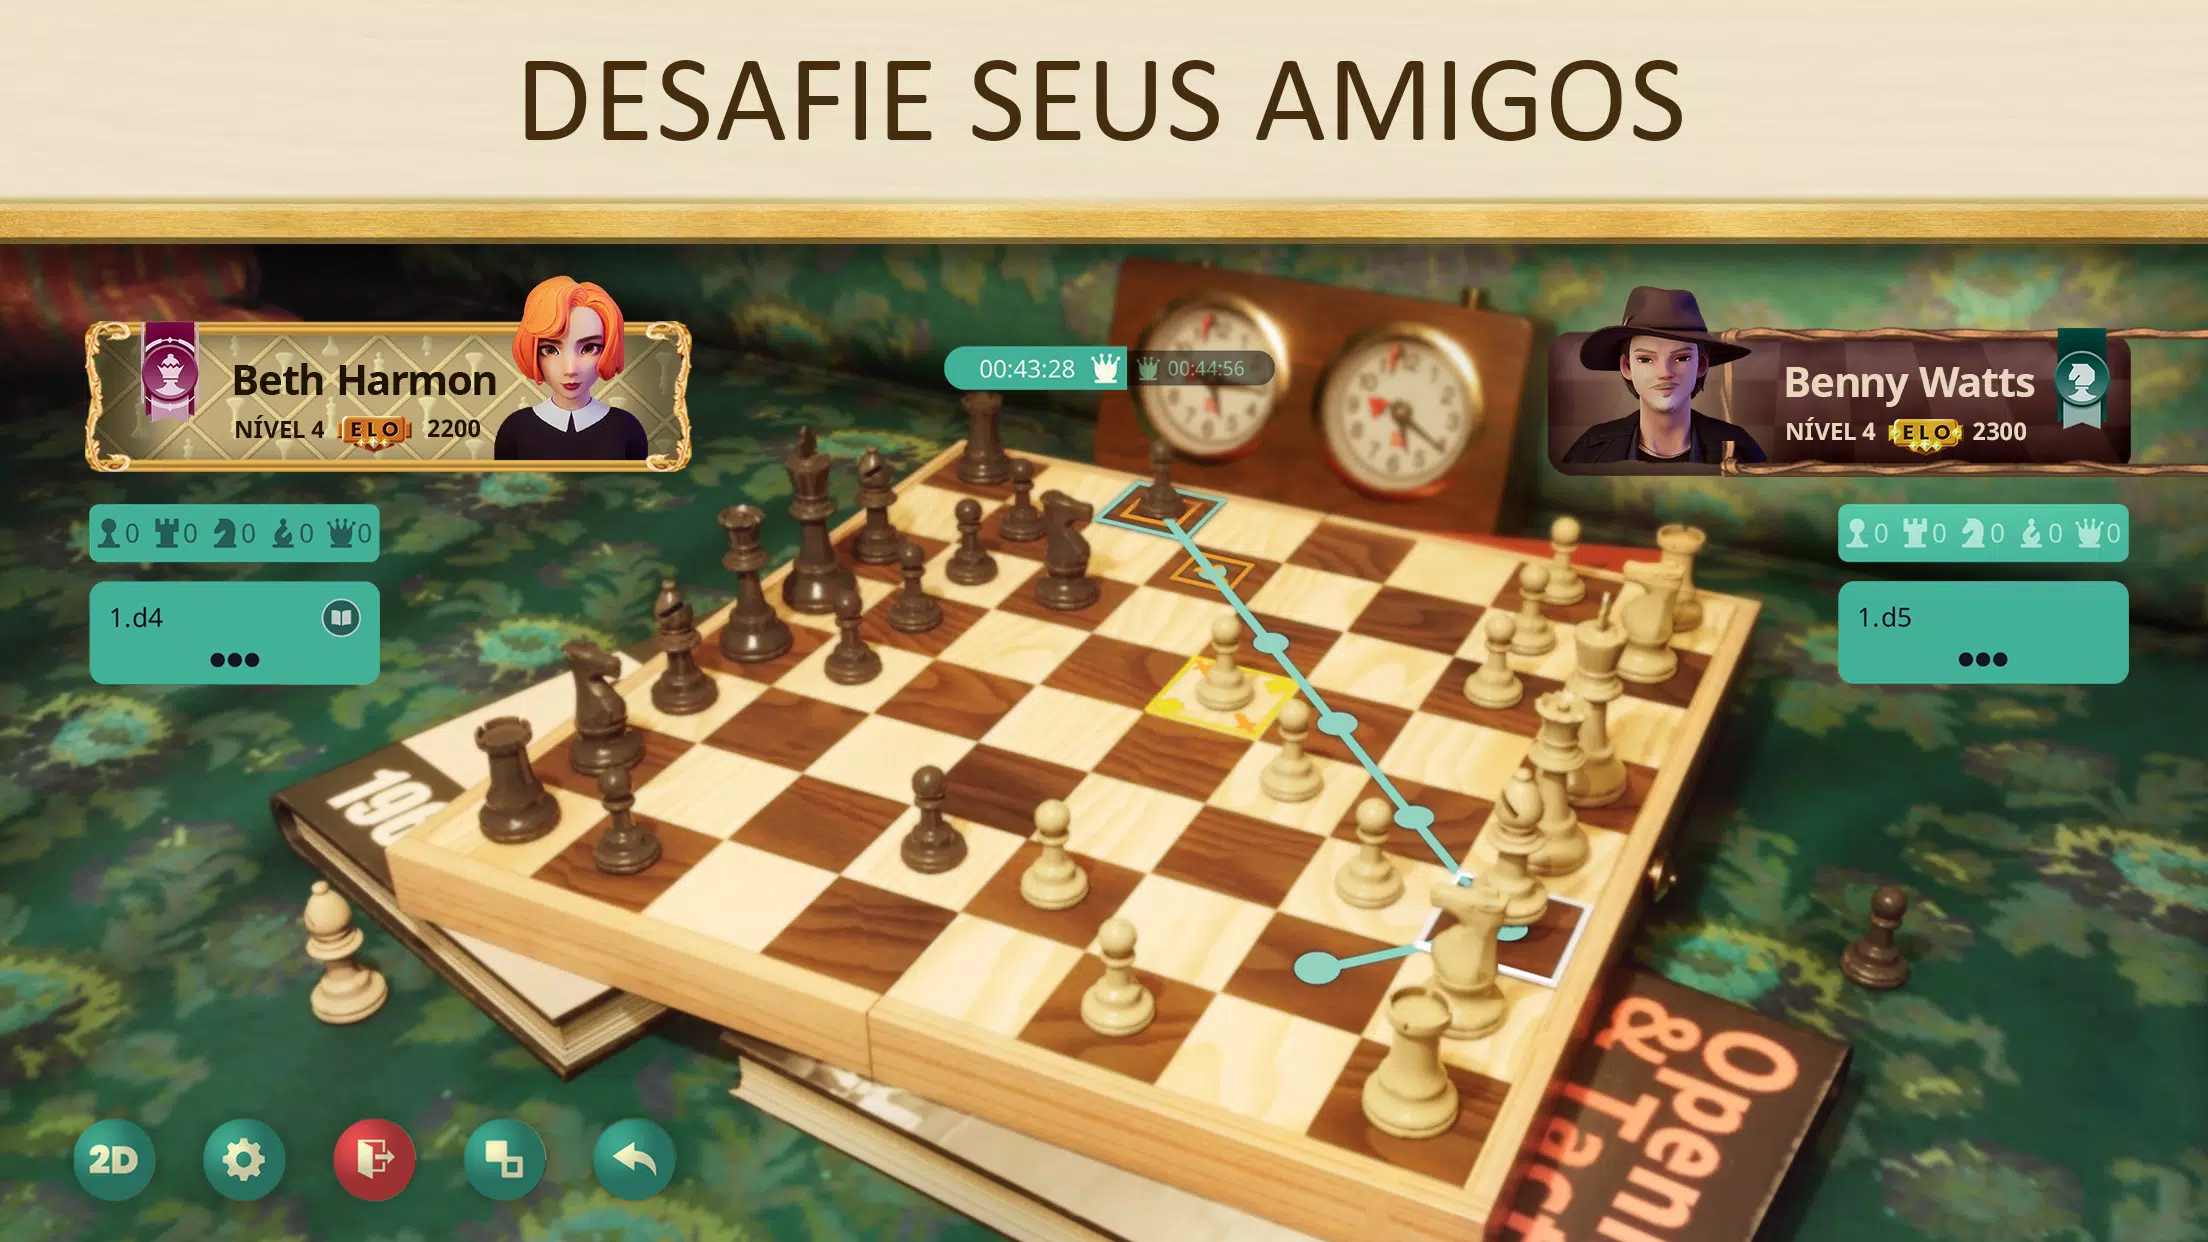 352 Bolo Xadrez de O Gambito da Rainha / Chess Cake from The Queens  Gambit (Netflix) 